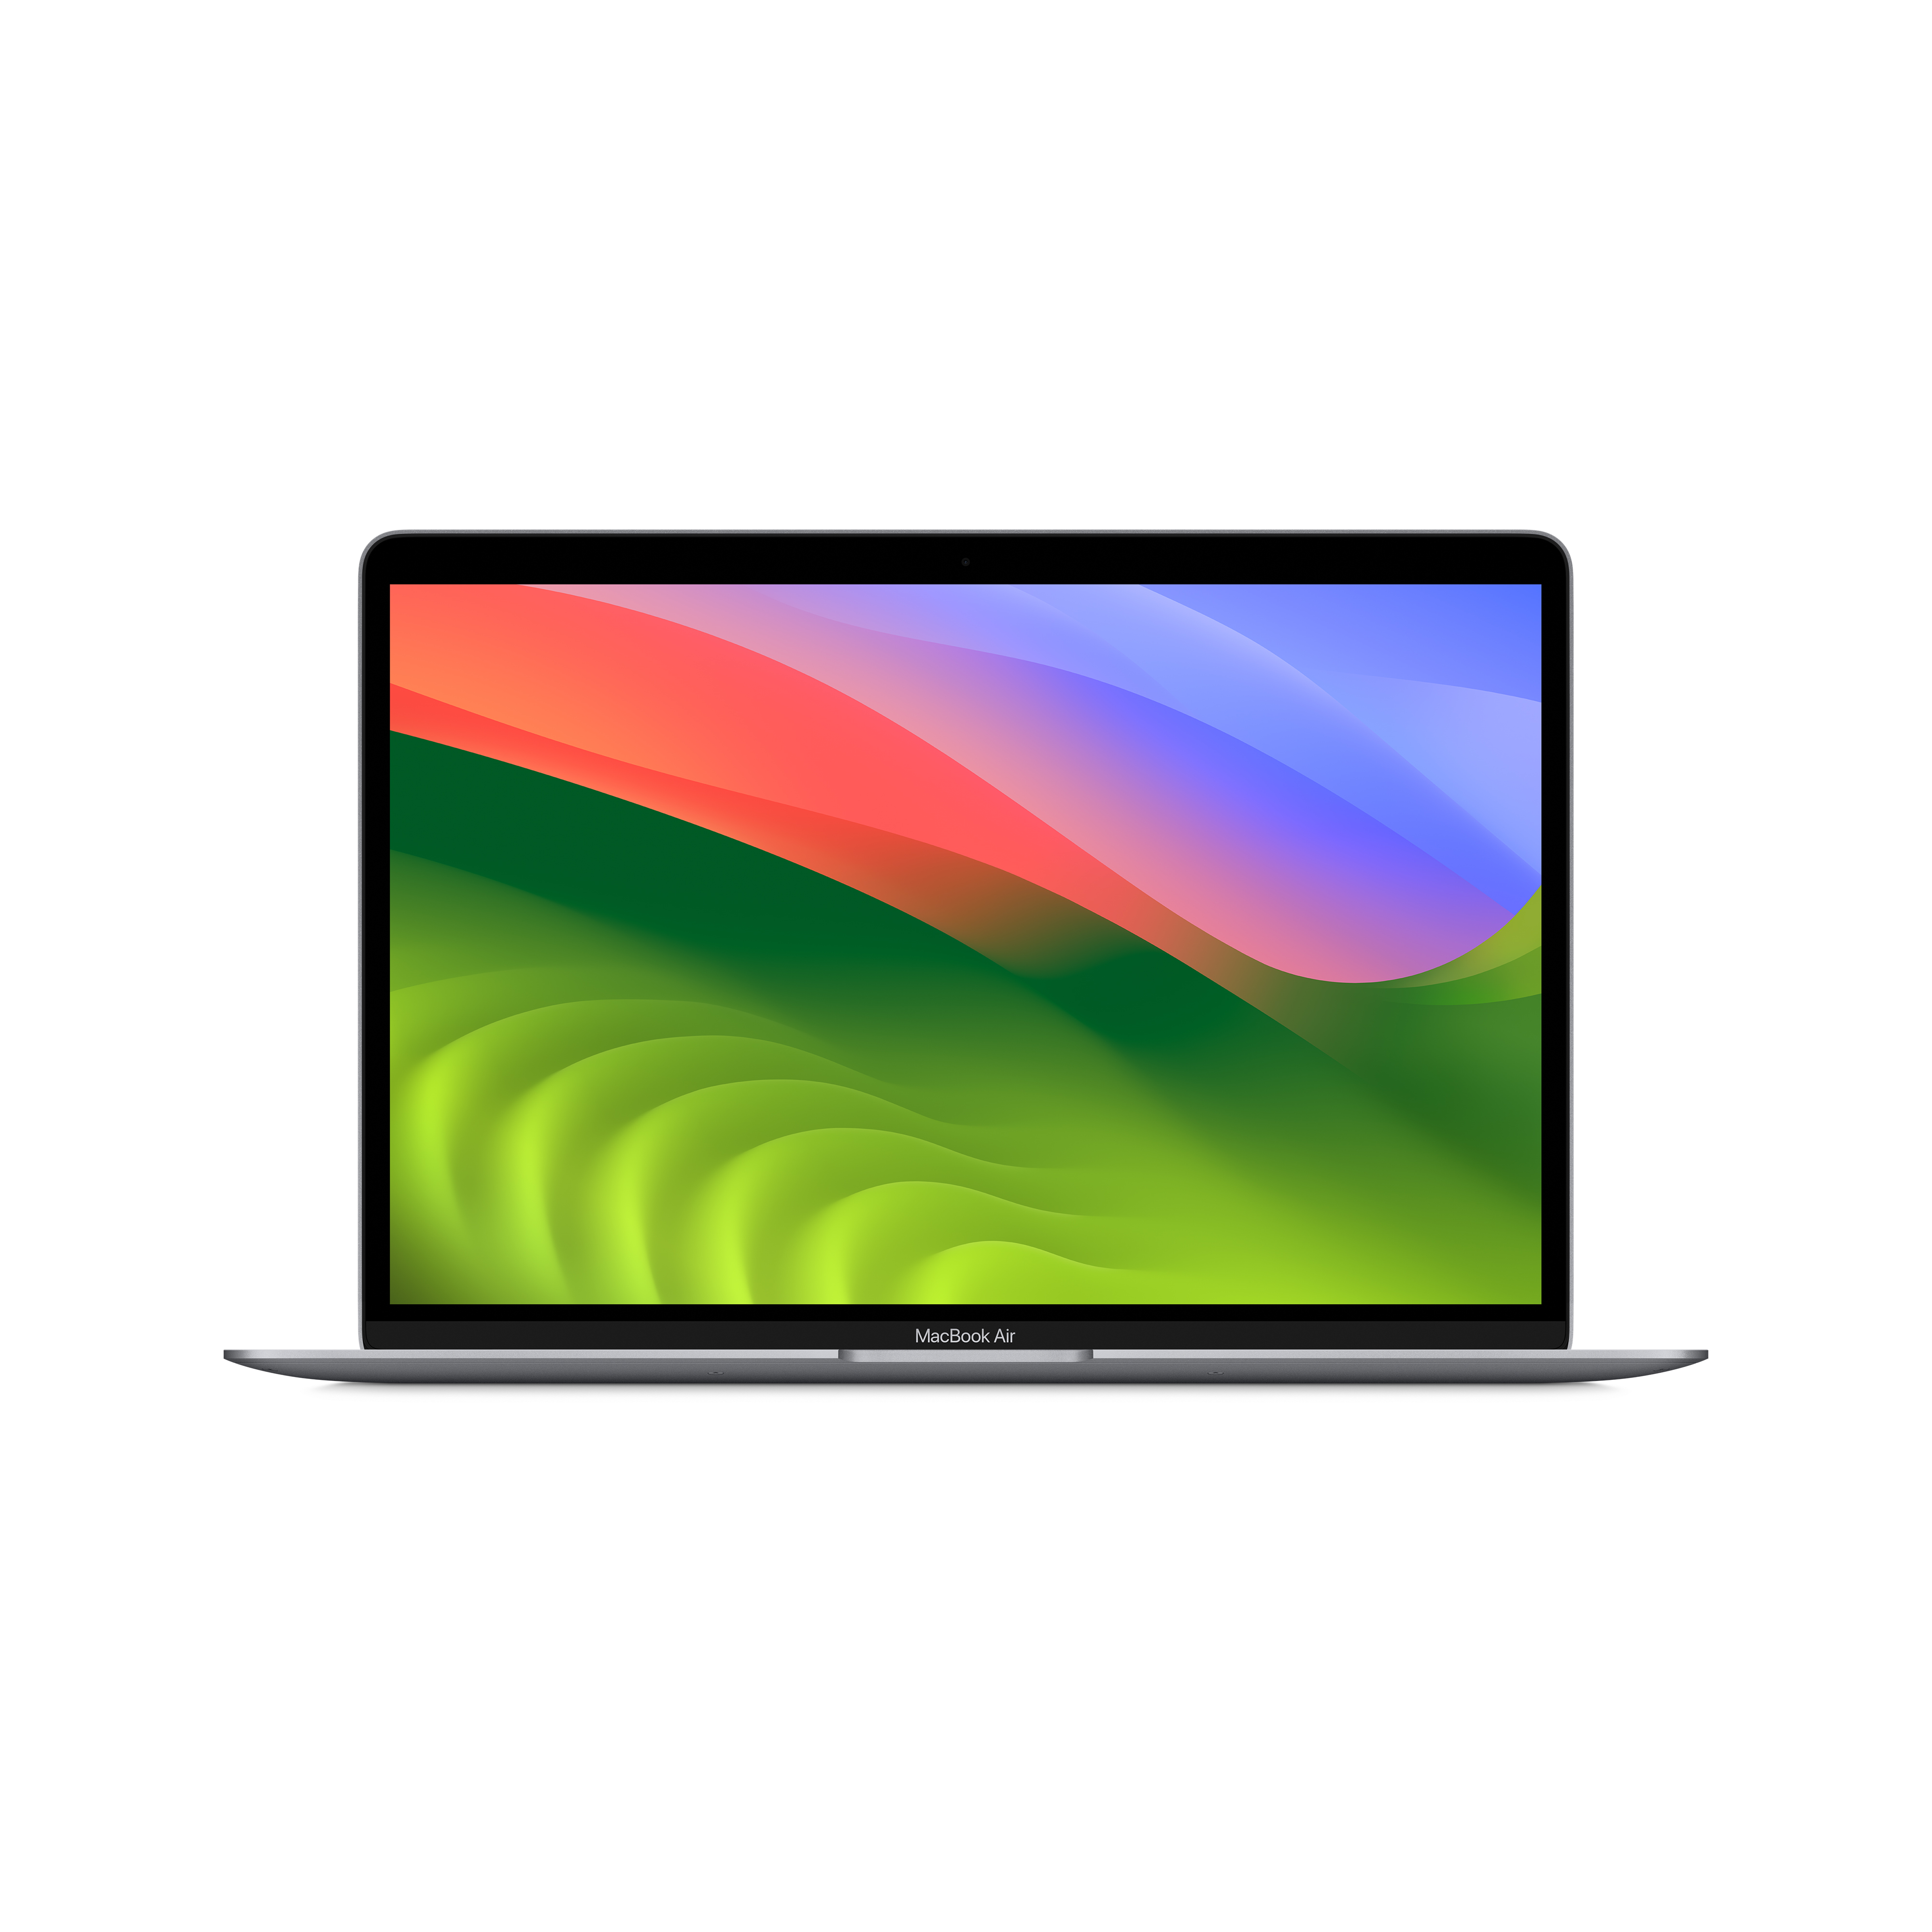 Apple MacBook Air 13.3 inch Laptop - Space Gray, M1 Chip, 8GB RAM, 256GB storage - image 1 of 10